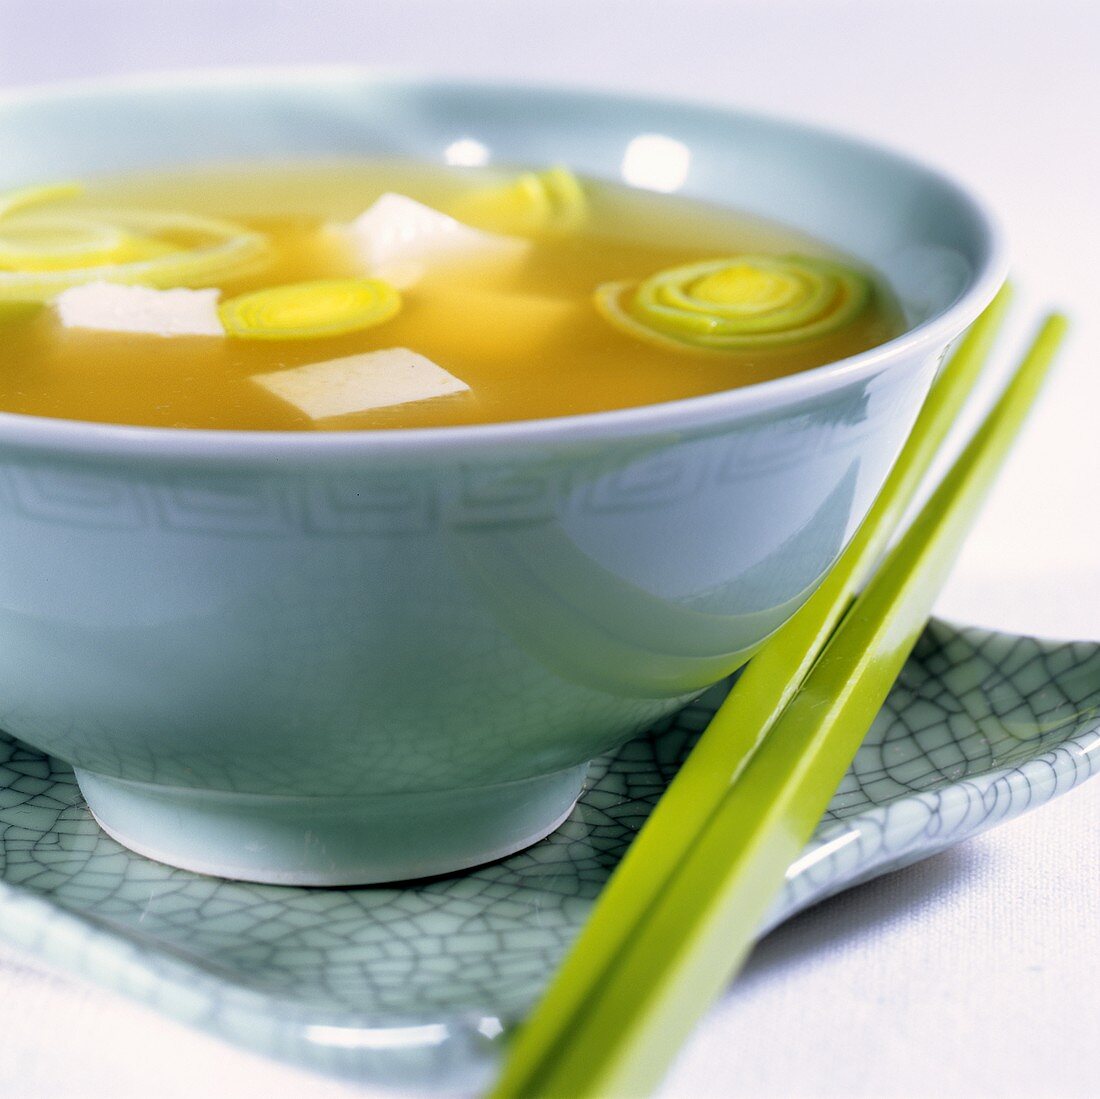 Miso soup with leeks and tofu